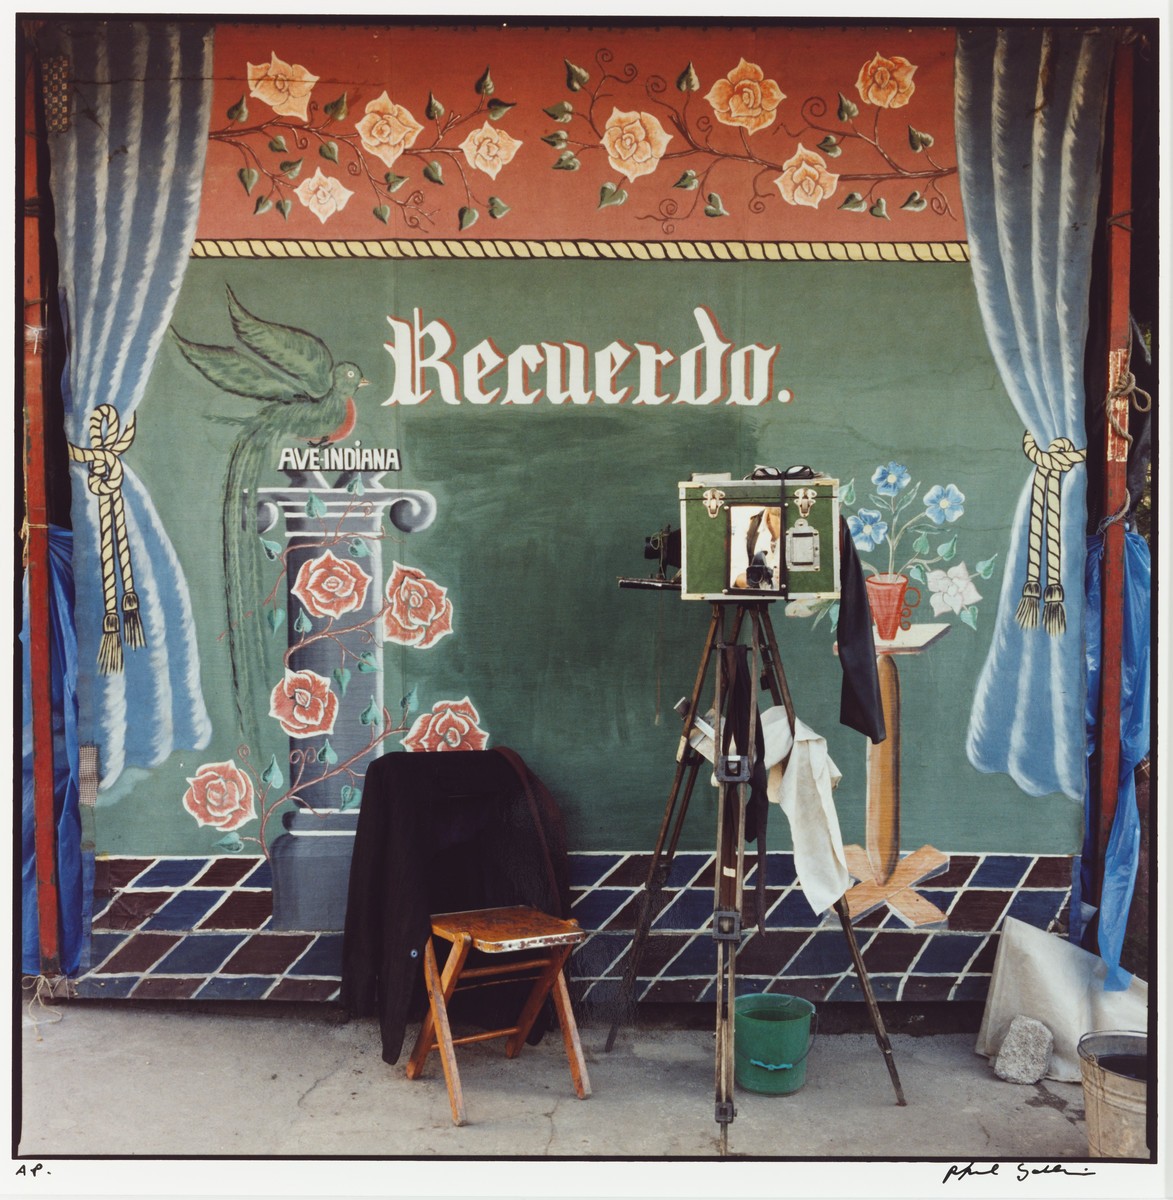 Rafael Goldchain, Itinerant Photographer's Studio (Recuerdo), Coban, Guatemala, 1987. Chromogenic print. 25.4 × 20.2 cm. Gift of David Angelo, 2019. © Rafael Goldchain. Courtesy of the Artist. 2019/2465.